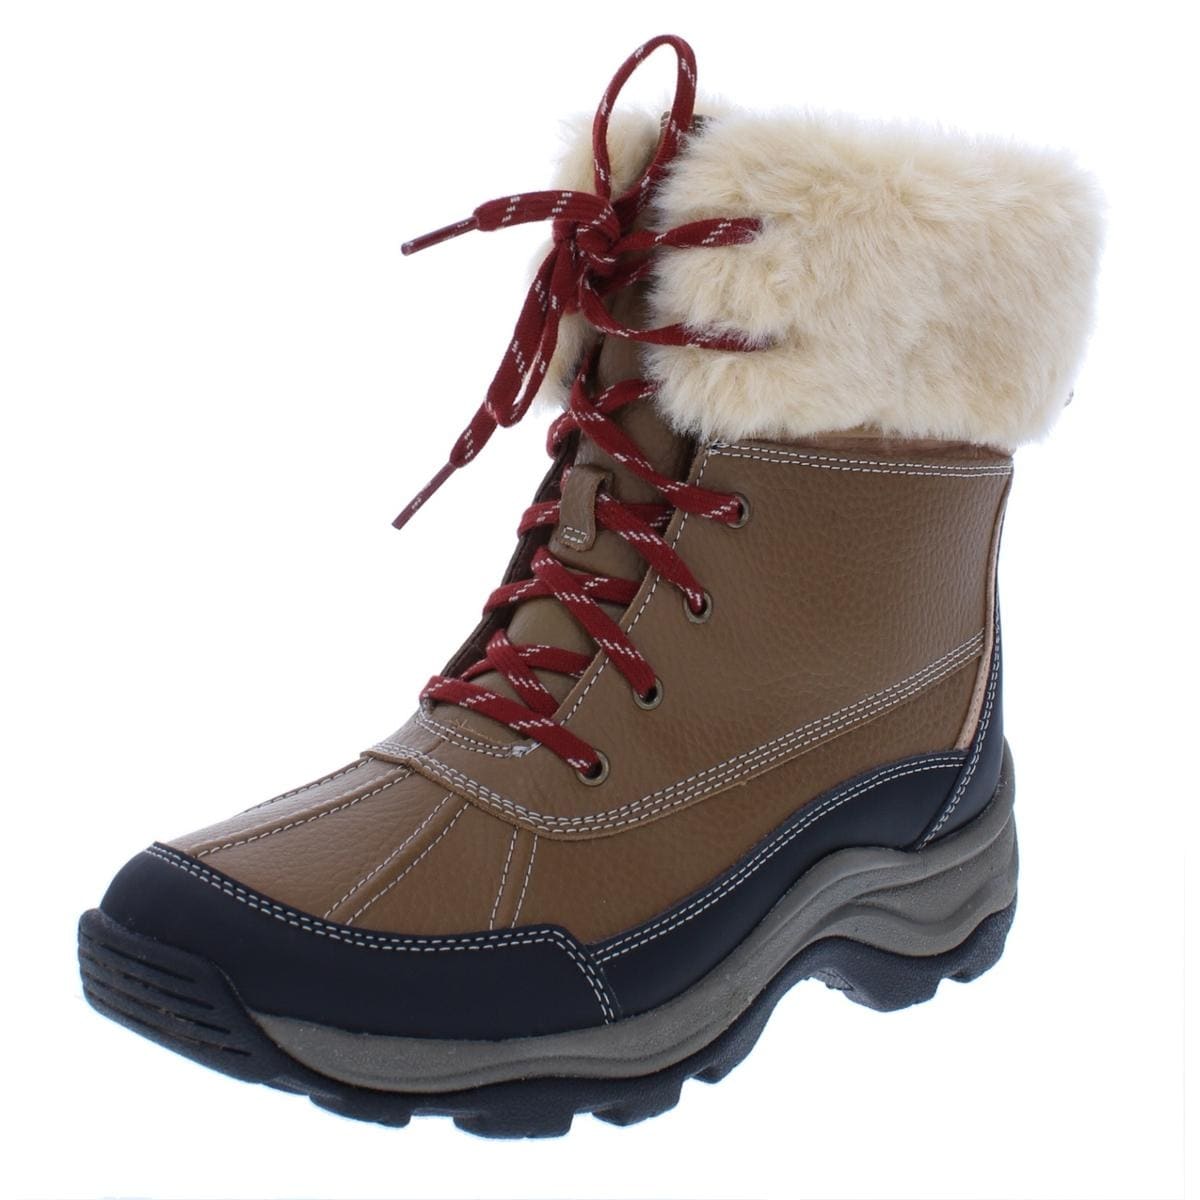 clarks winter boot